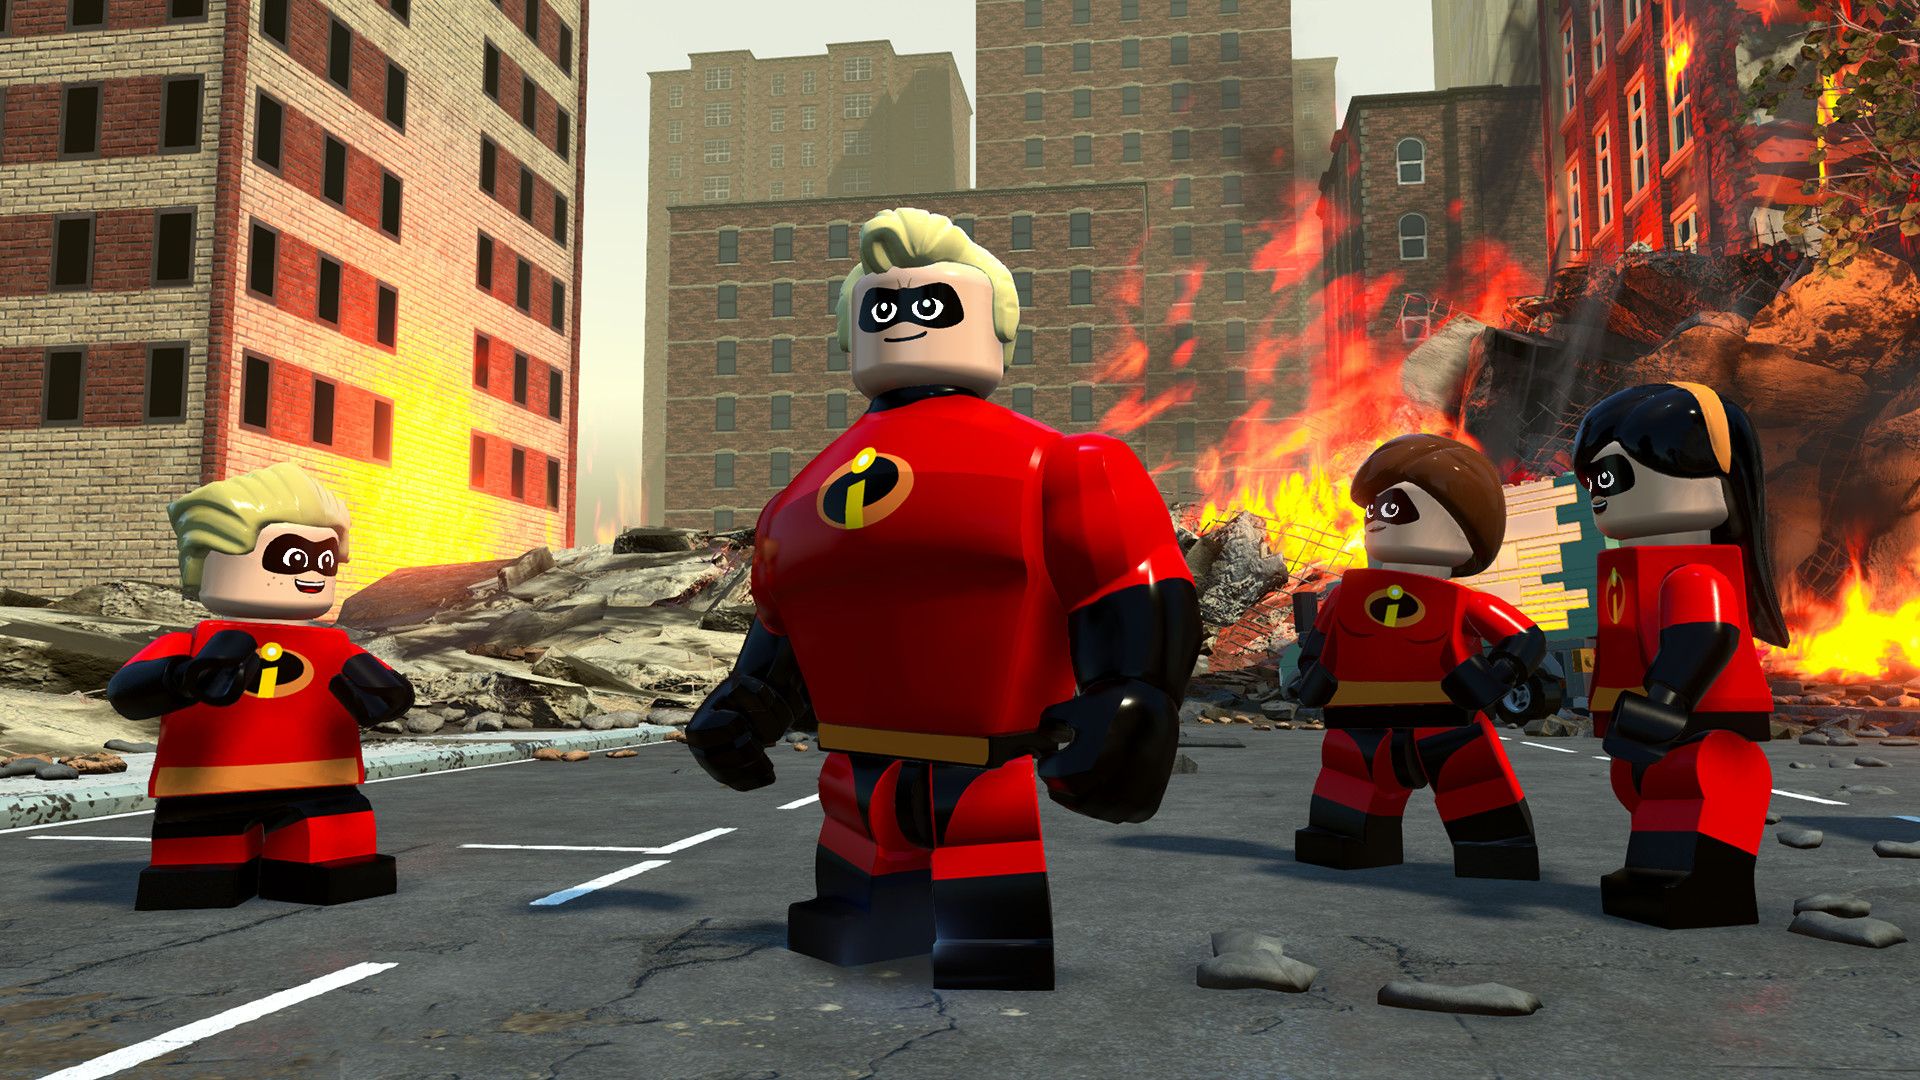 Lego: Disney Pixar's The Incredibles